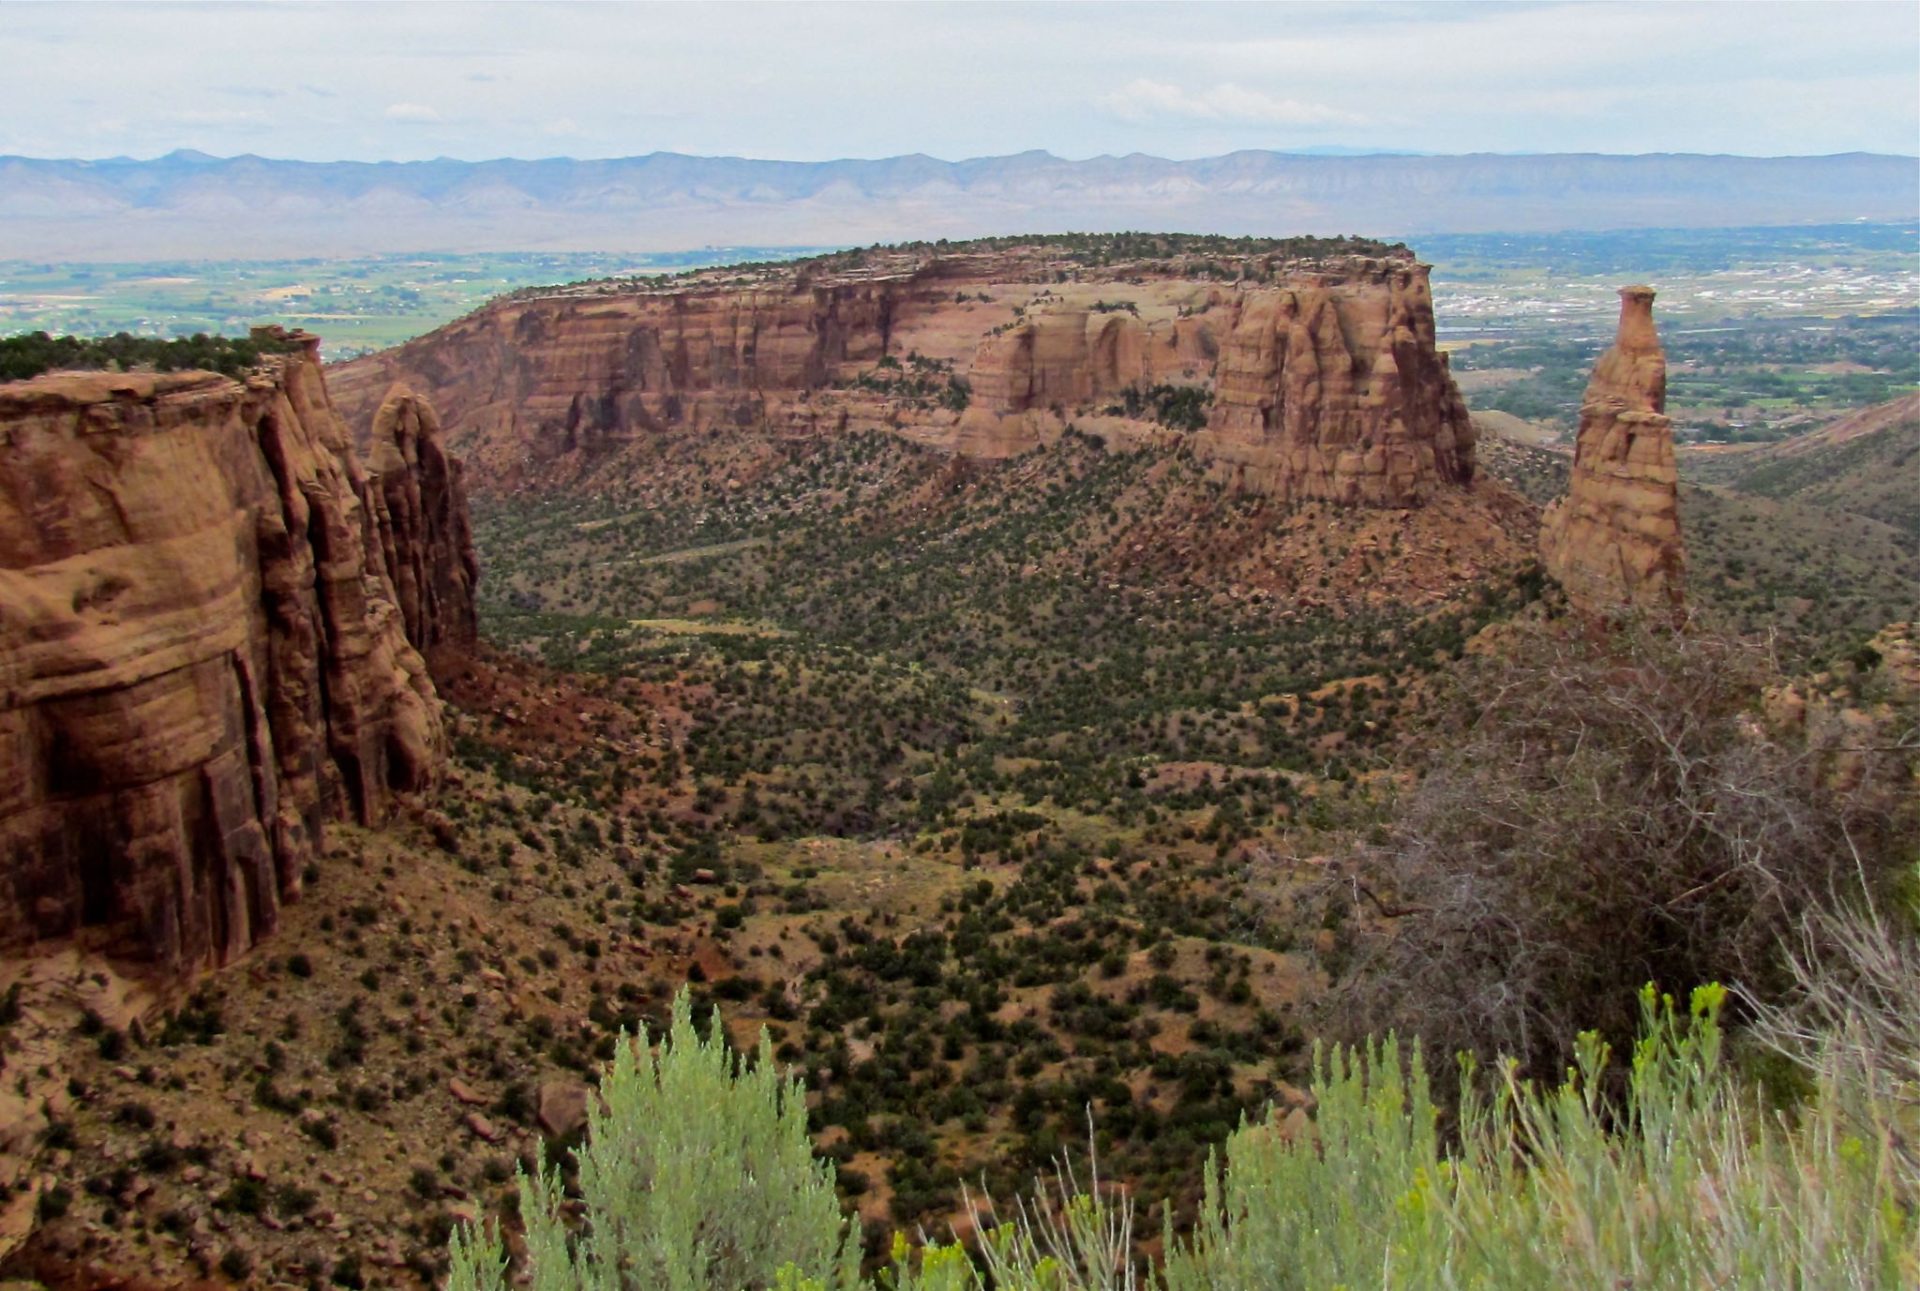 Colorado National Monument. Photo by Pauline Rosenberg via Flickr CC 